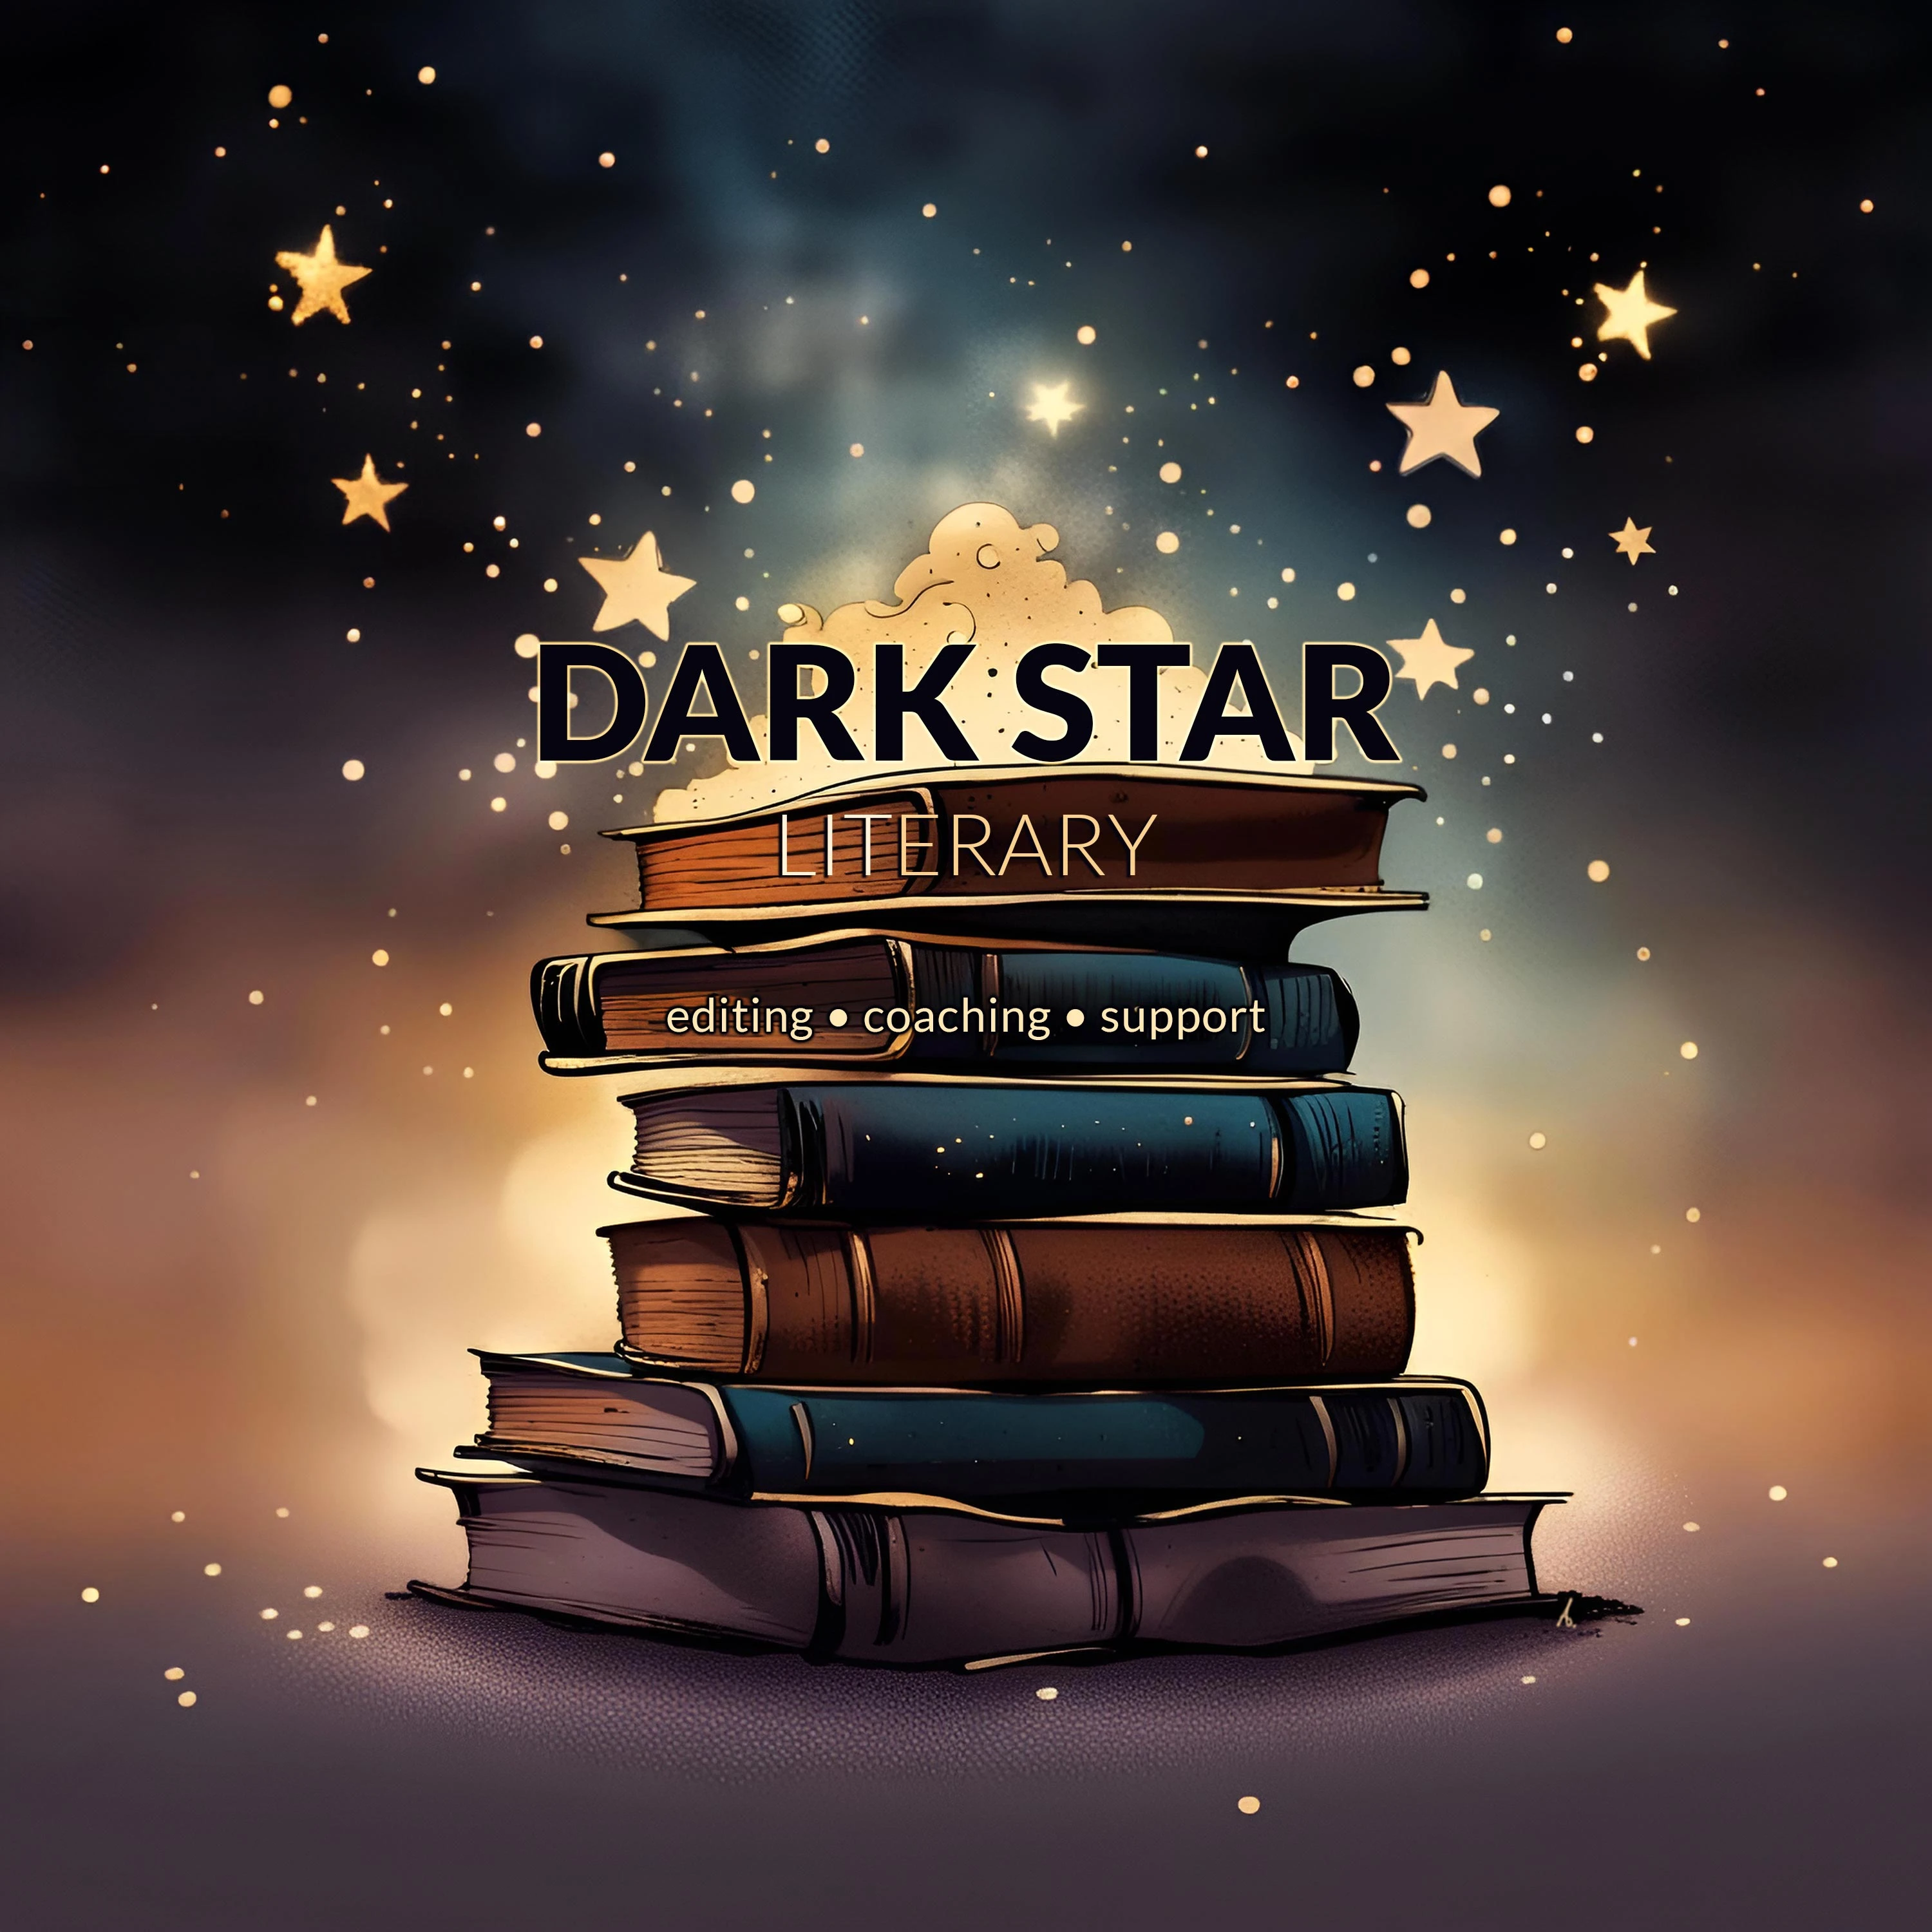 r38-dark-star-lit-signature-book-stack-static-text-17066802144869.jpg